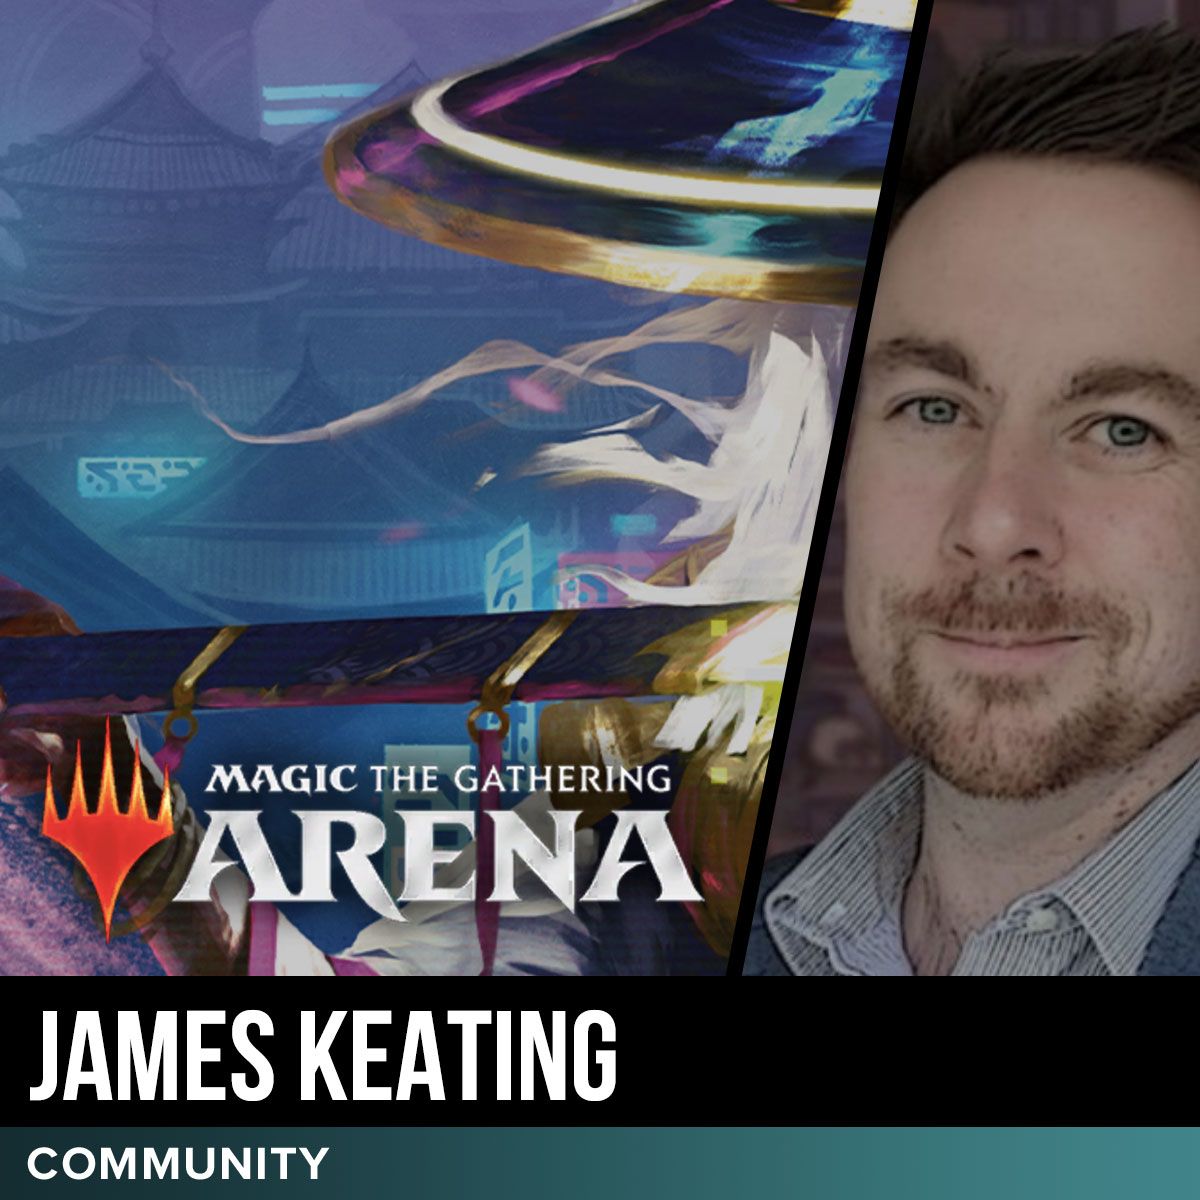 Magic: The Gathering Arena en Steam